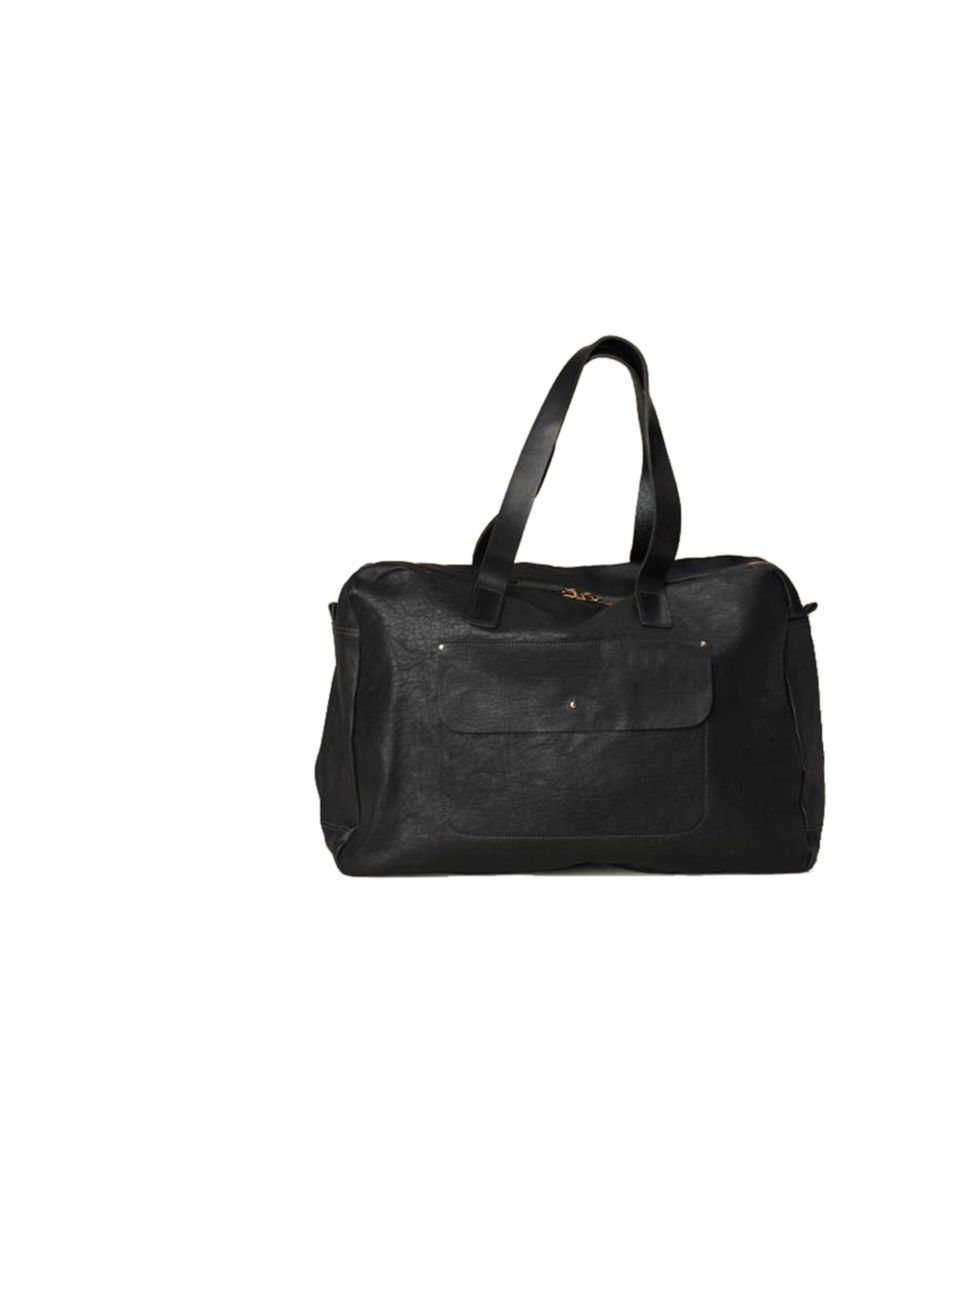 <p><a href="http://www.allycapellino.co.uk/">Ally Capellino</a> leather travel bag, £560</p>